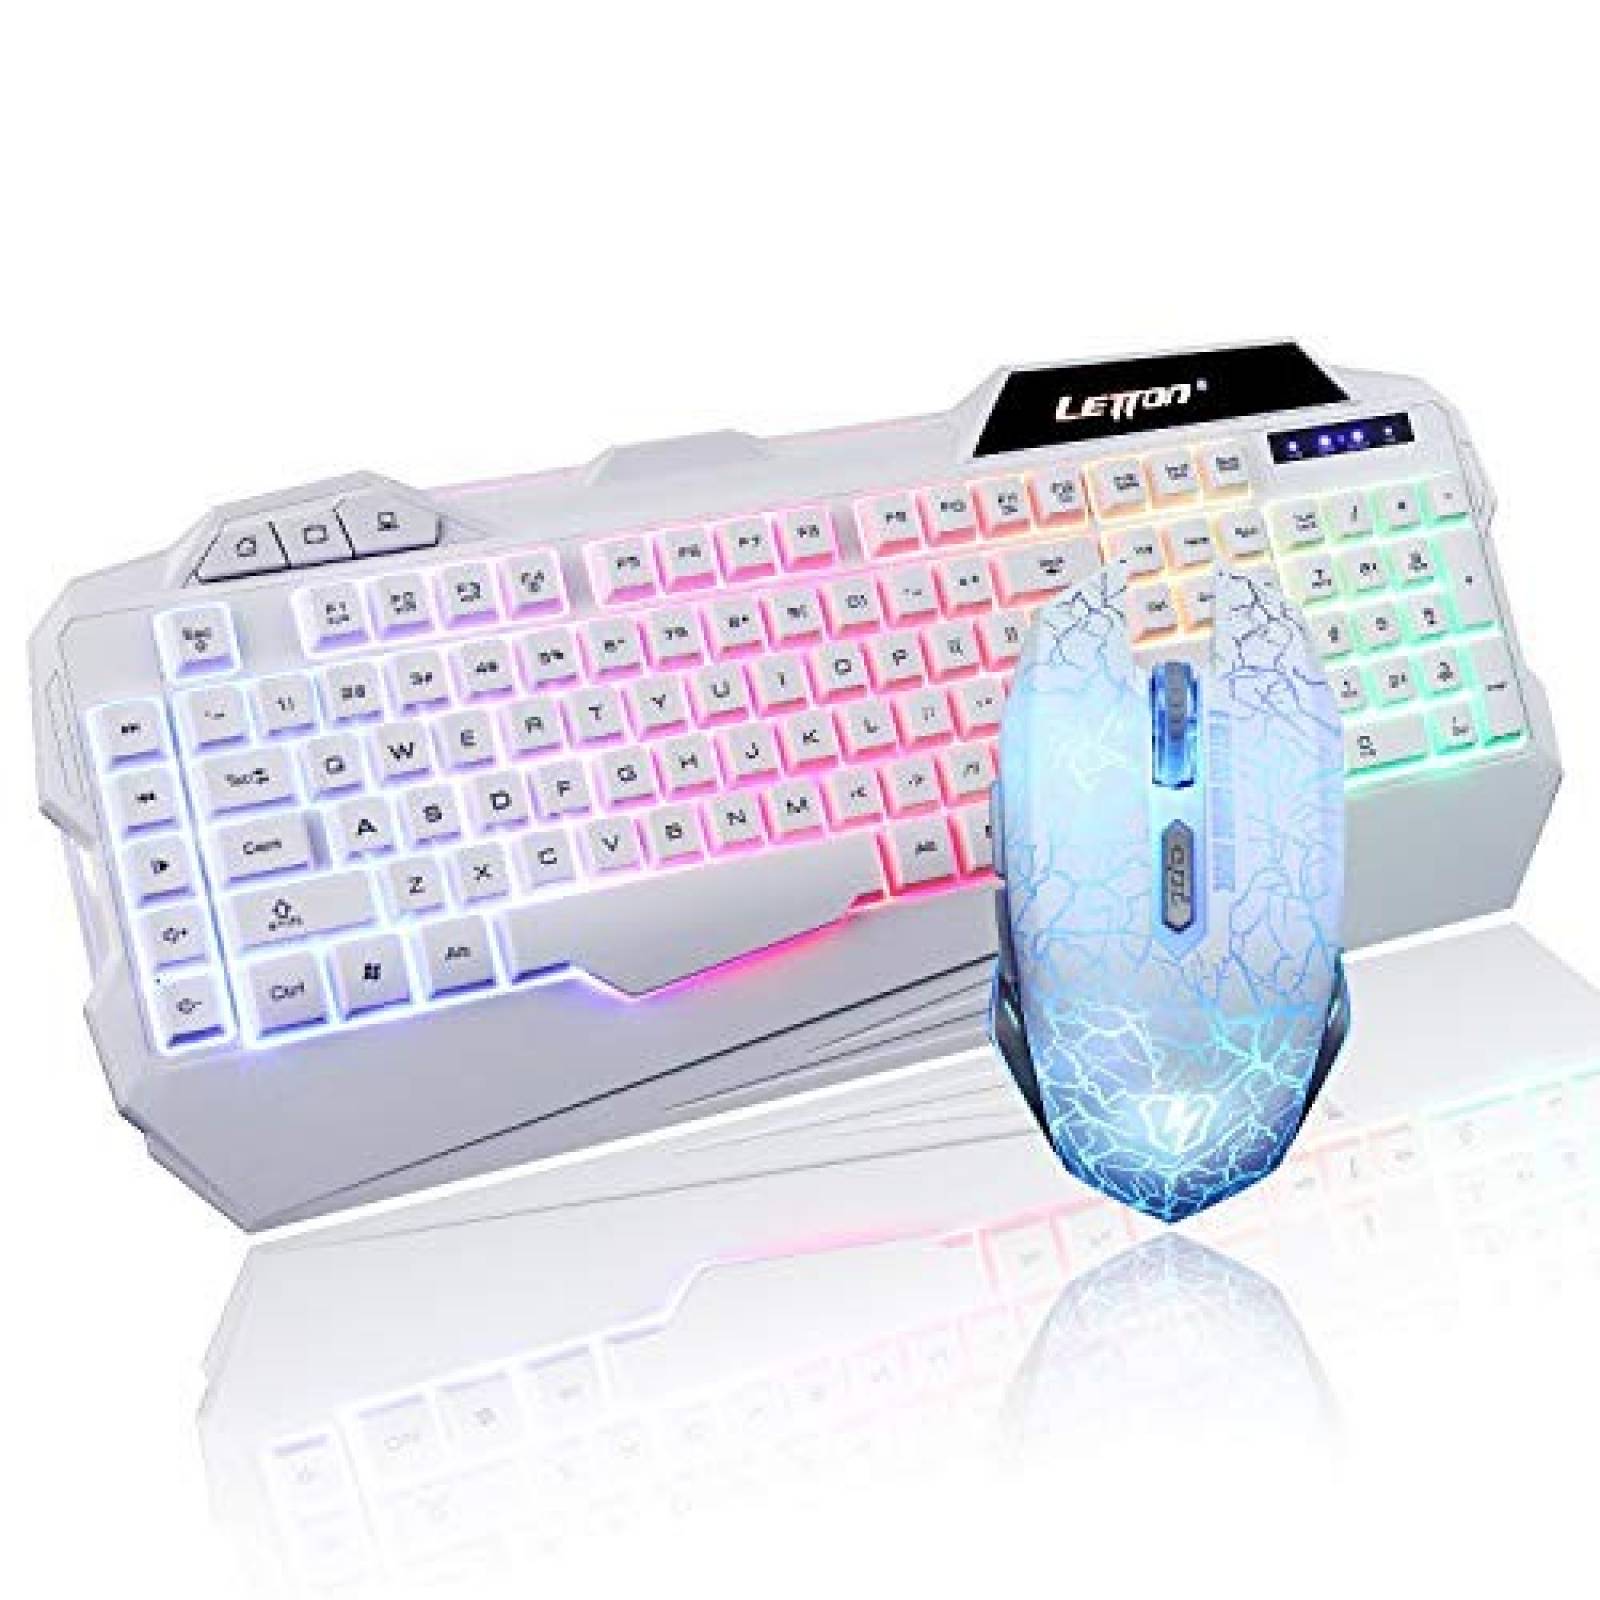 Combo de teclado y mouse Gaming LETTON LED RGB ergonómicos